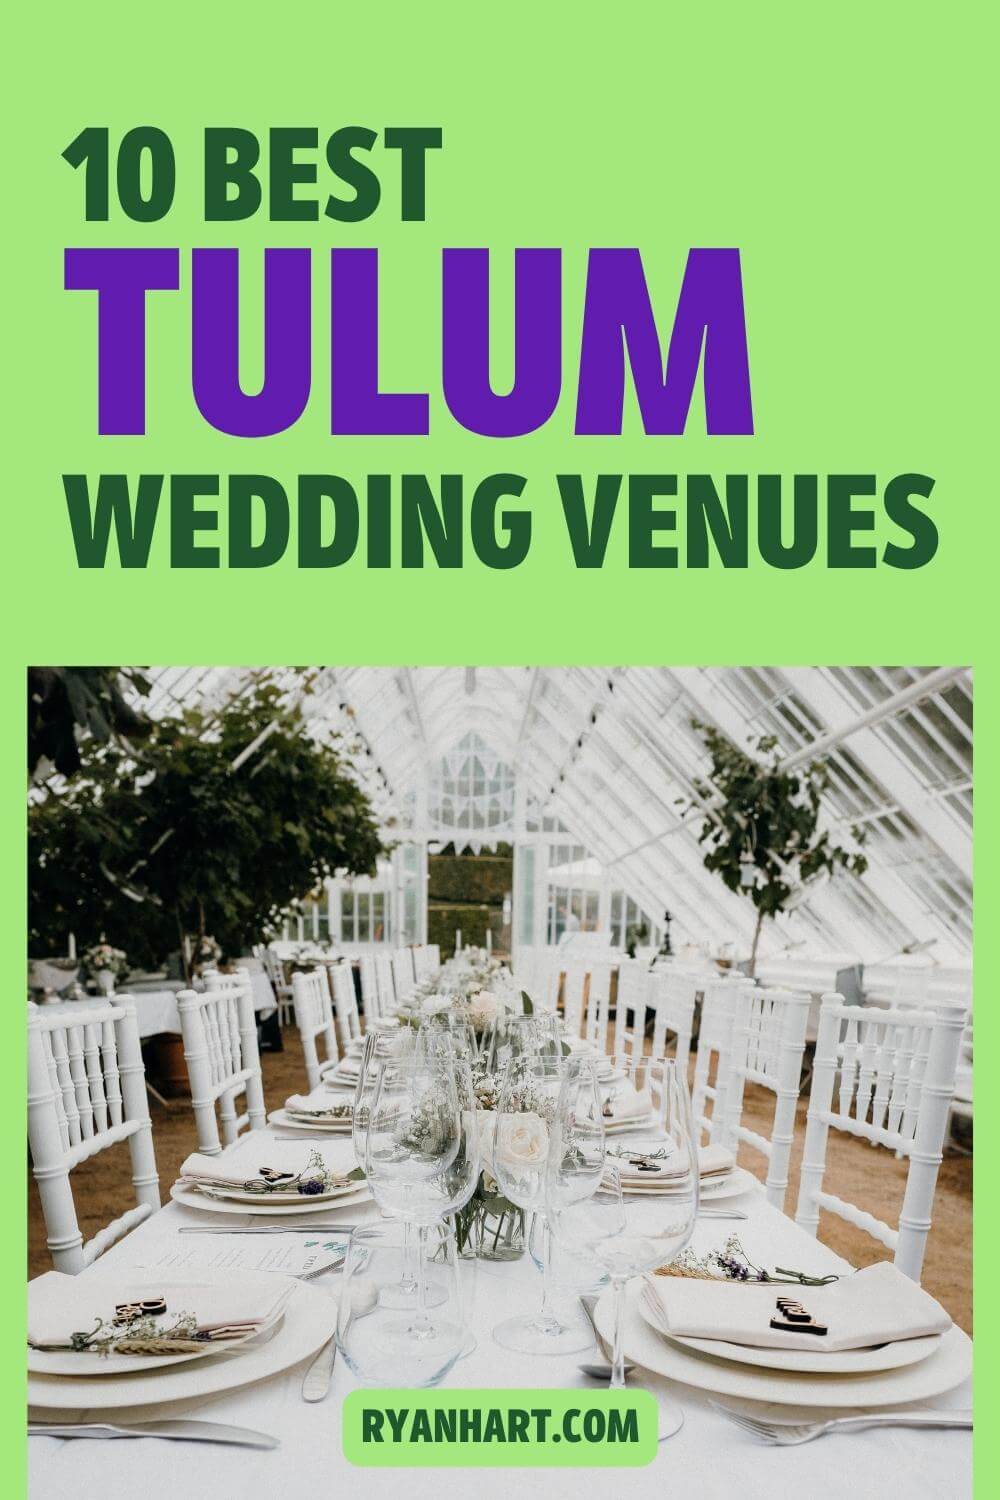 Tulum beach wedding